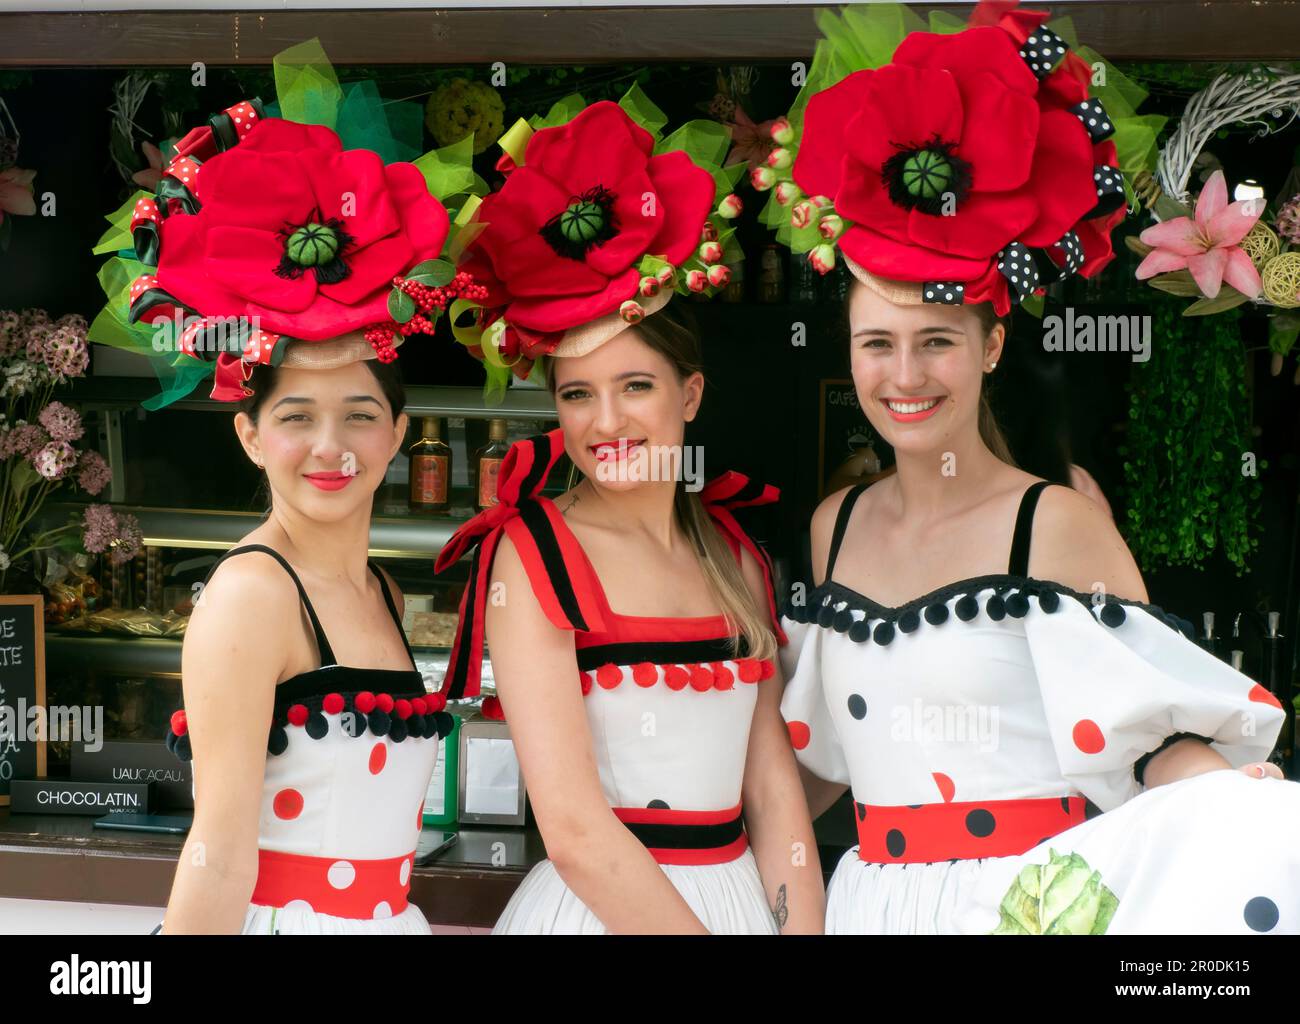 Flower Girls, The May Flower Festival, Funchal, Madeira, Portugal Stock Photo